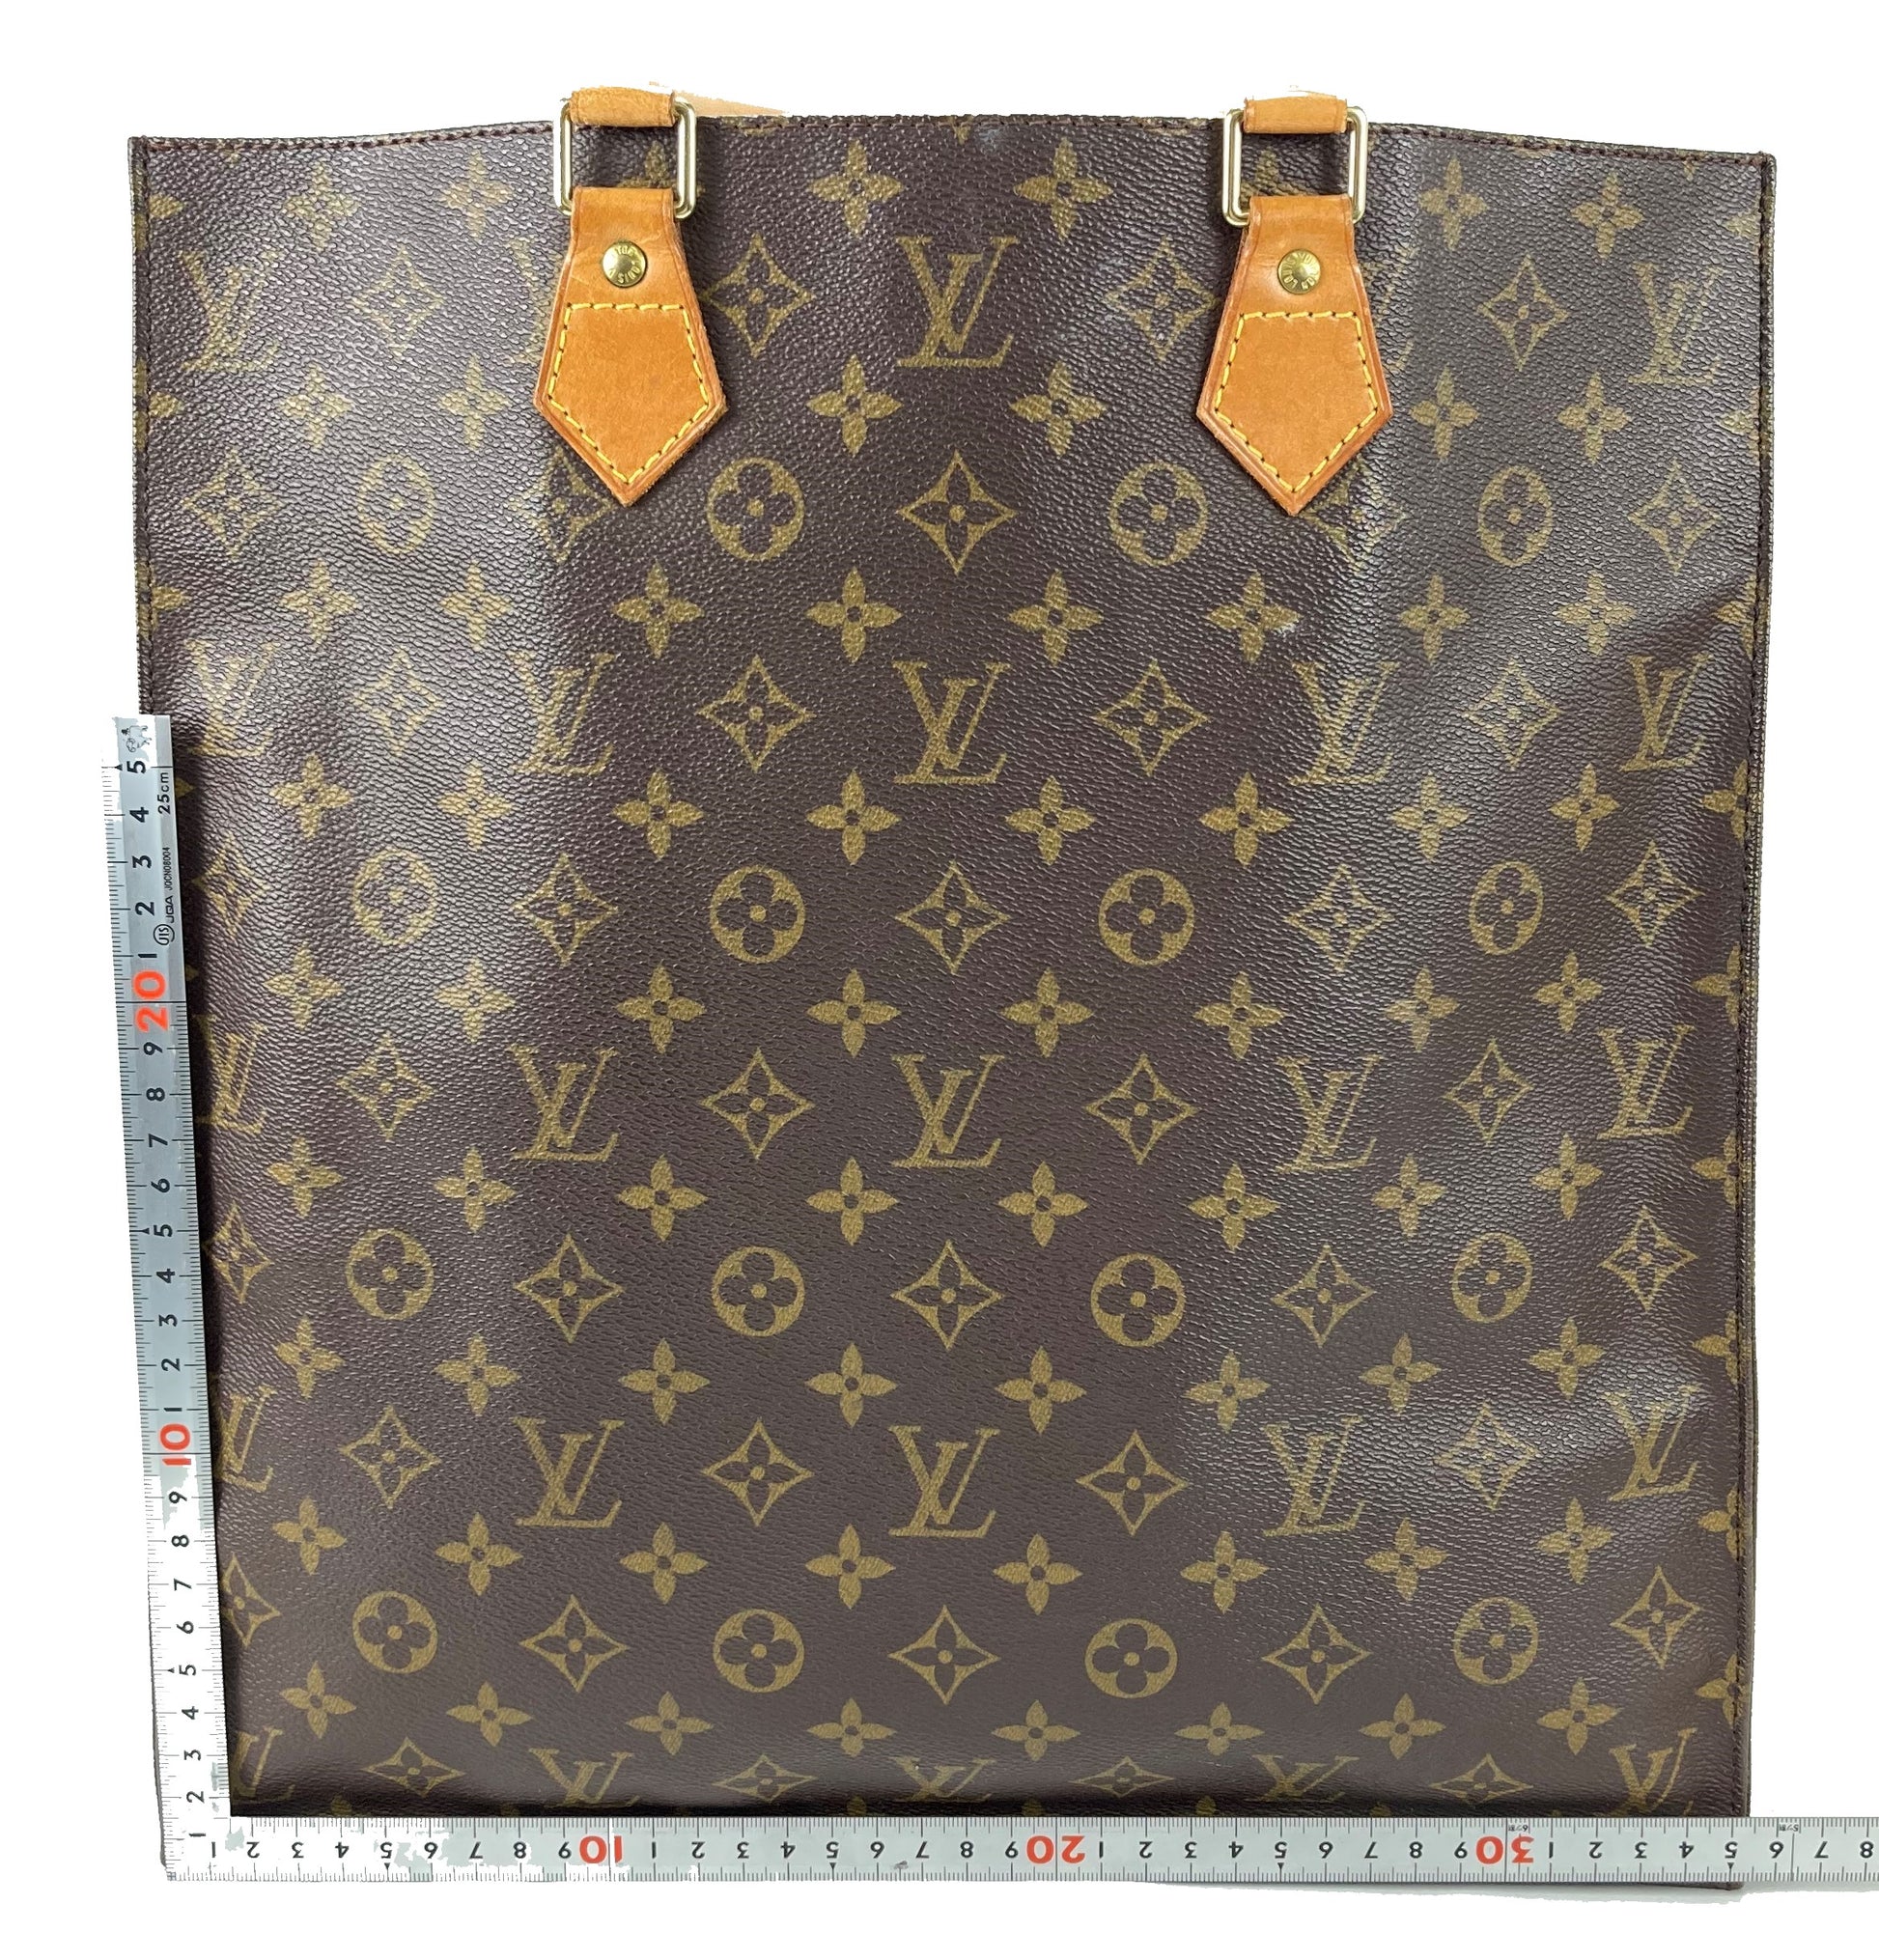 Authentic Louis Vuitton Tote Bag Sac Plat M51140 Brown Monogram